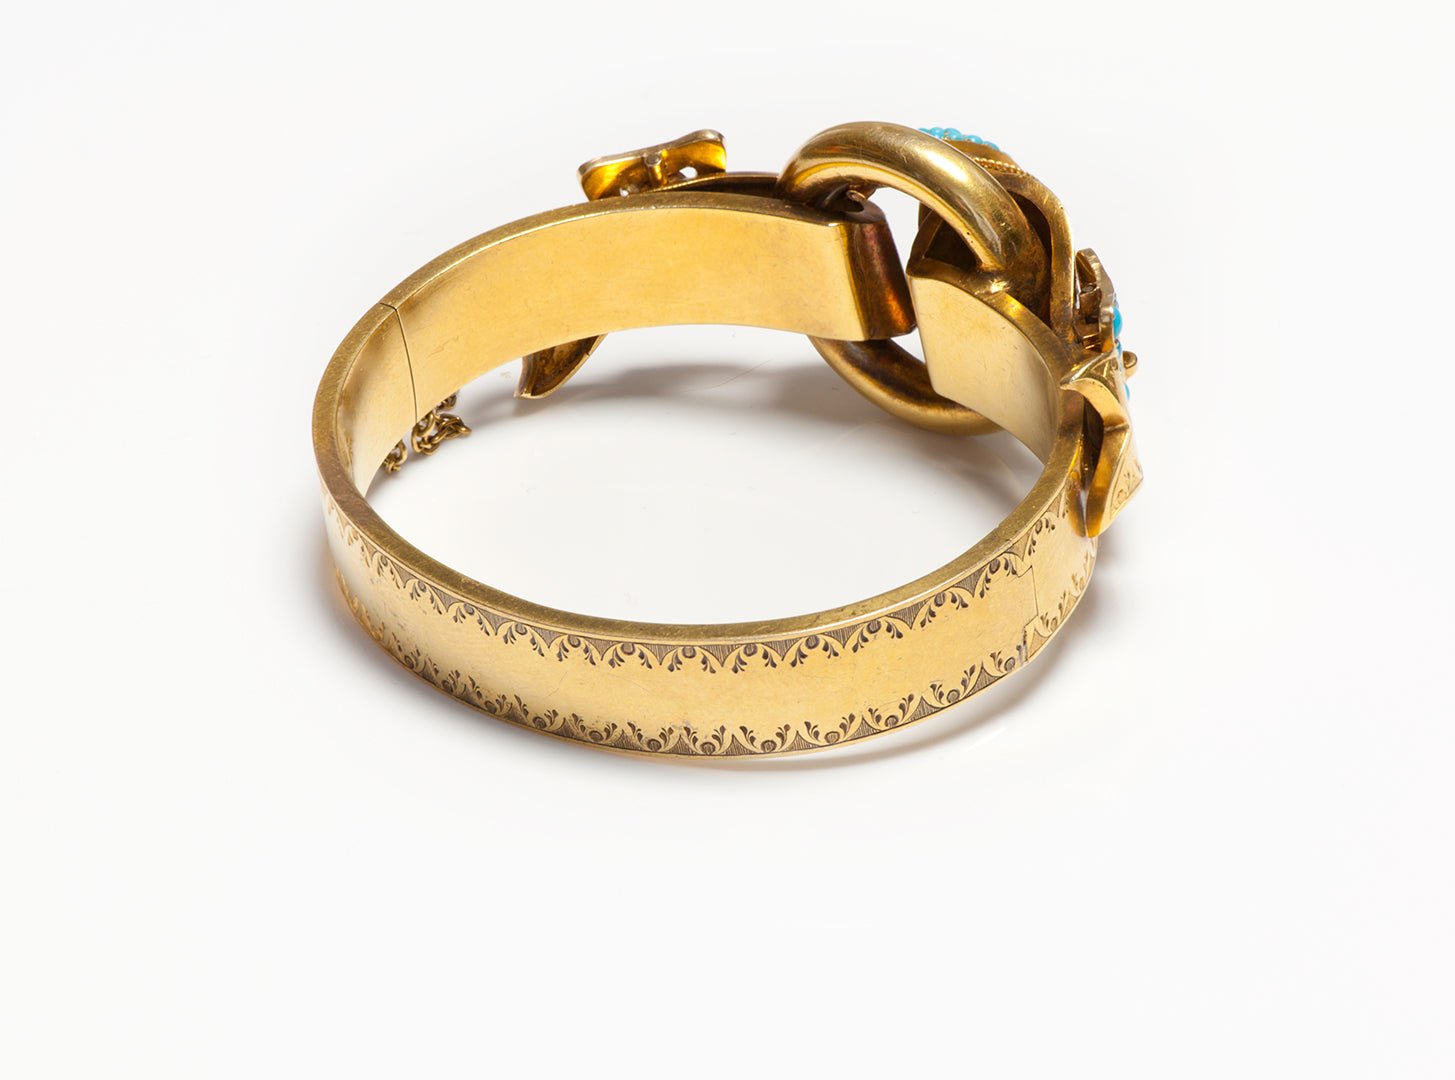 Antique Victorian Gold Turquoise Buckle Bangle Bracelet